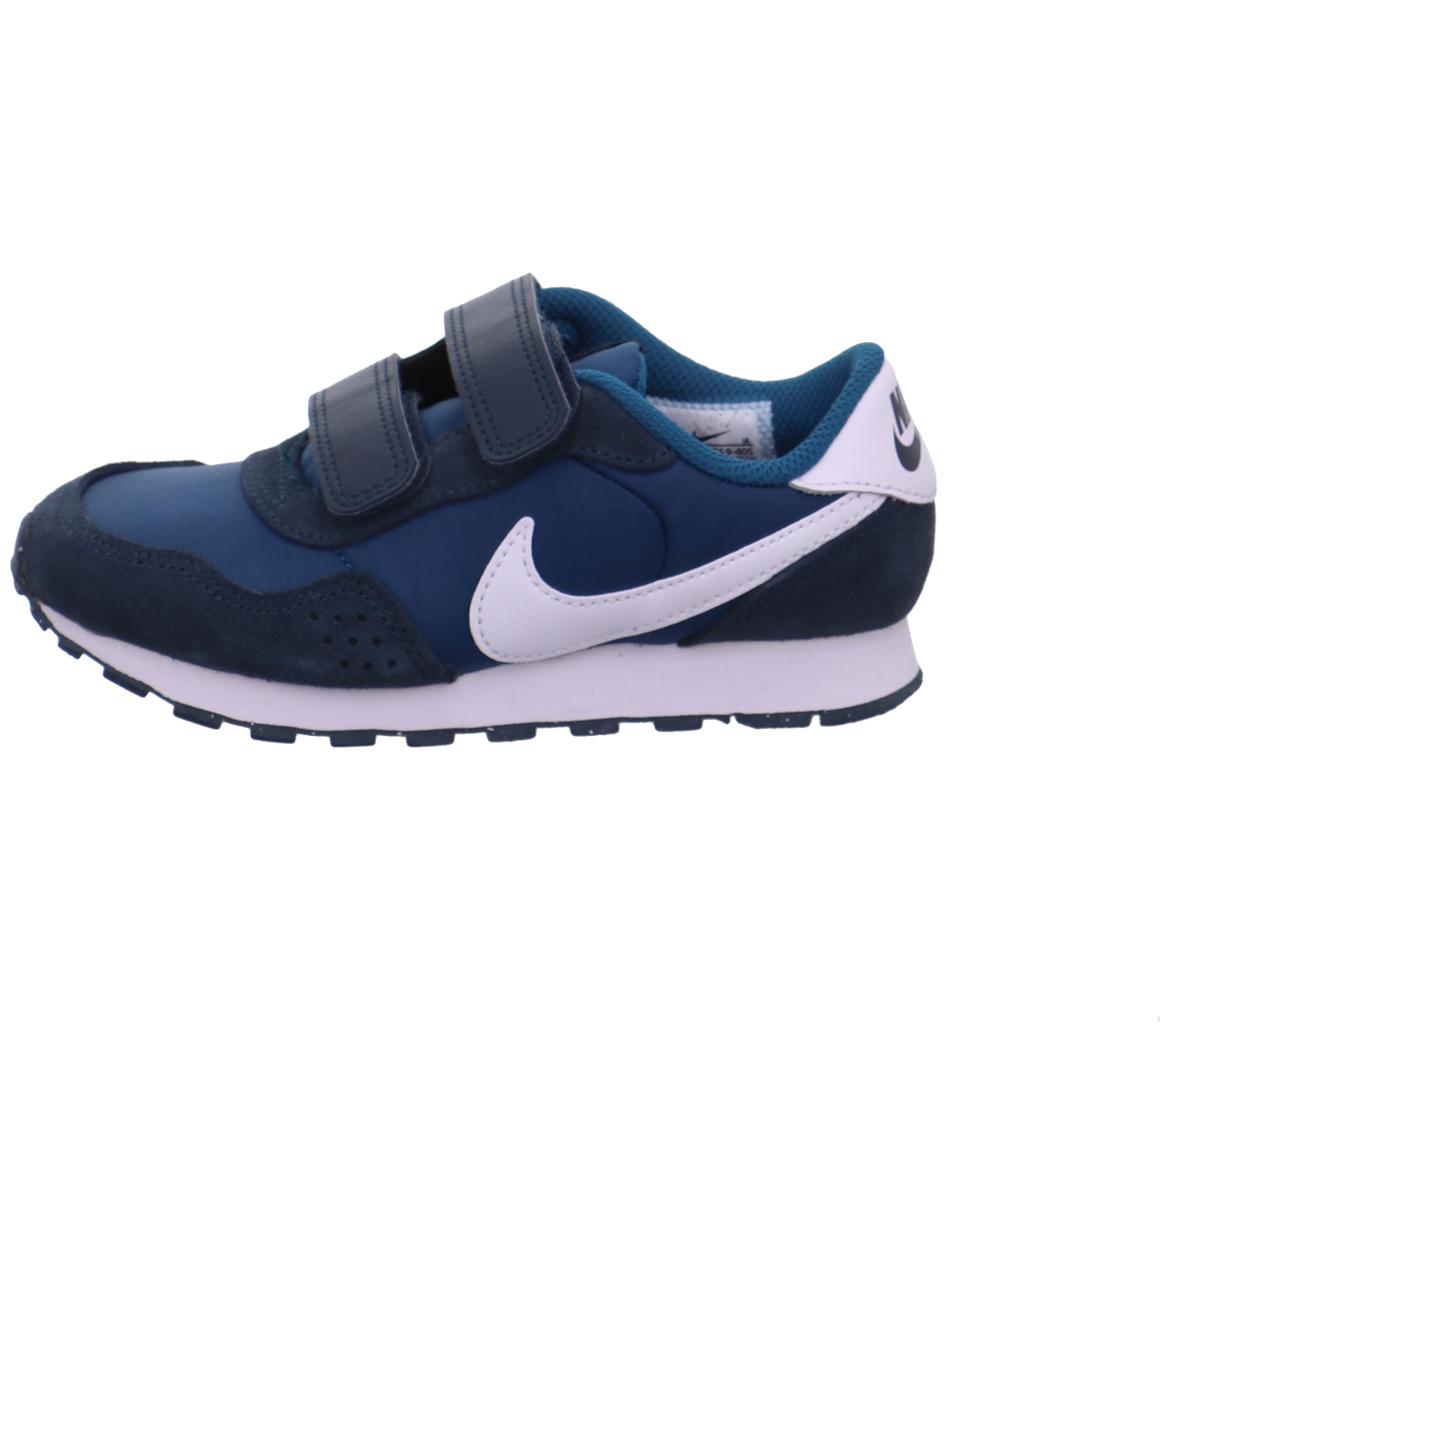 Nike Halbschuhe blau kombi Bild1